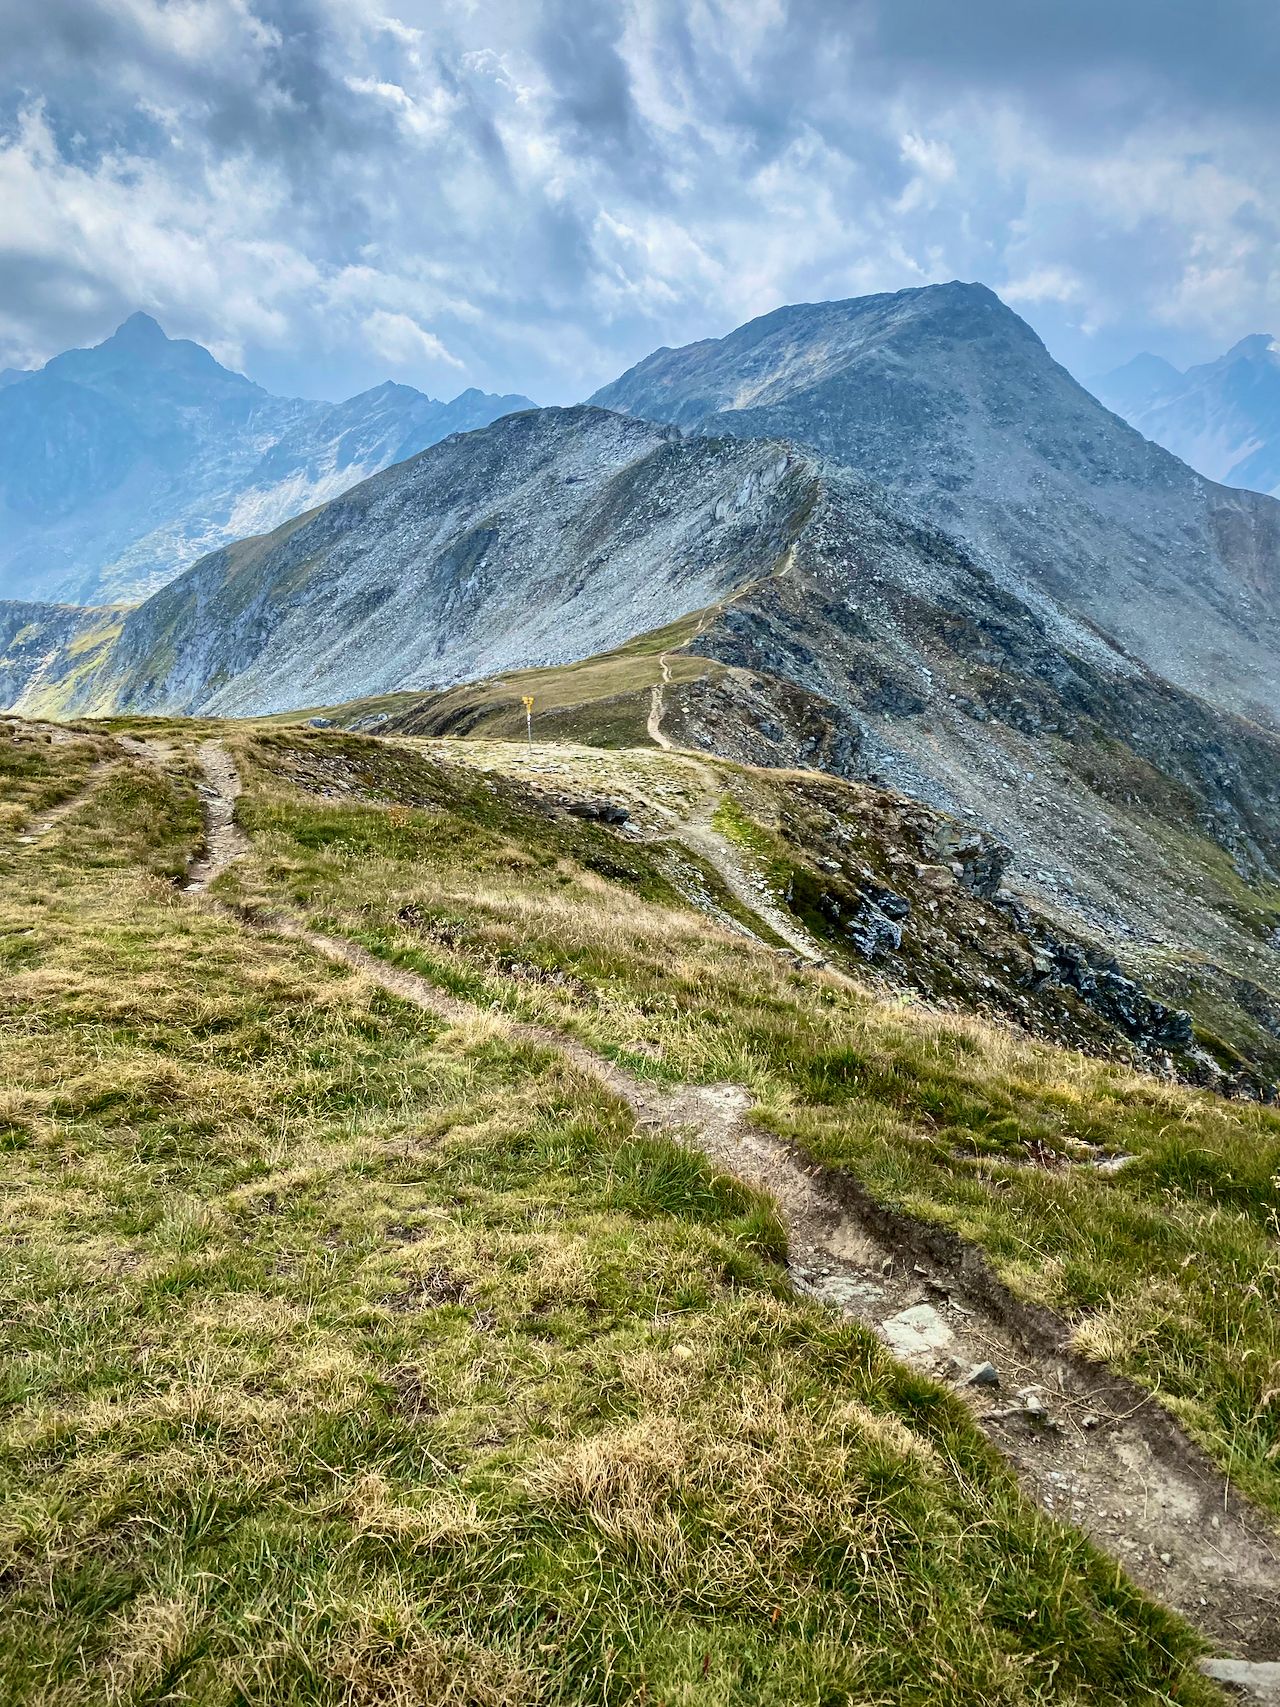 A trail visible along a ridge leading upward toward mountain peaks.